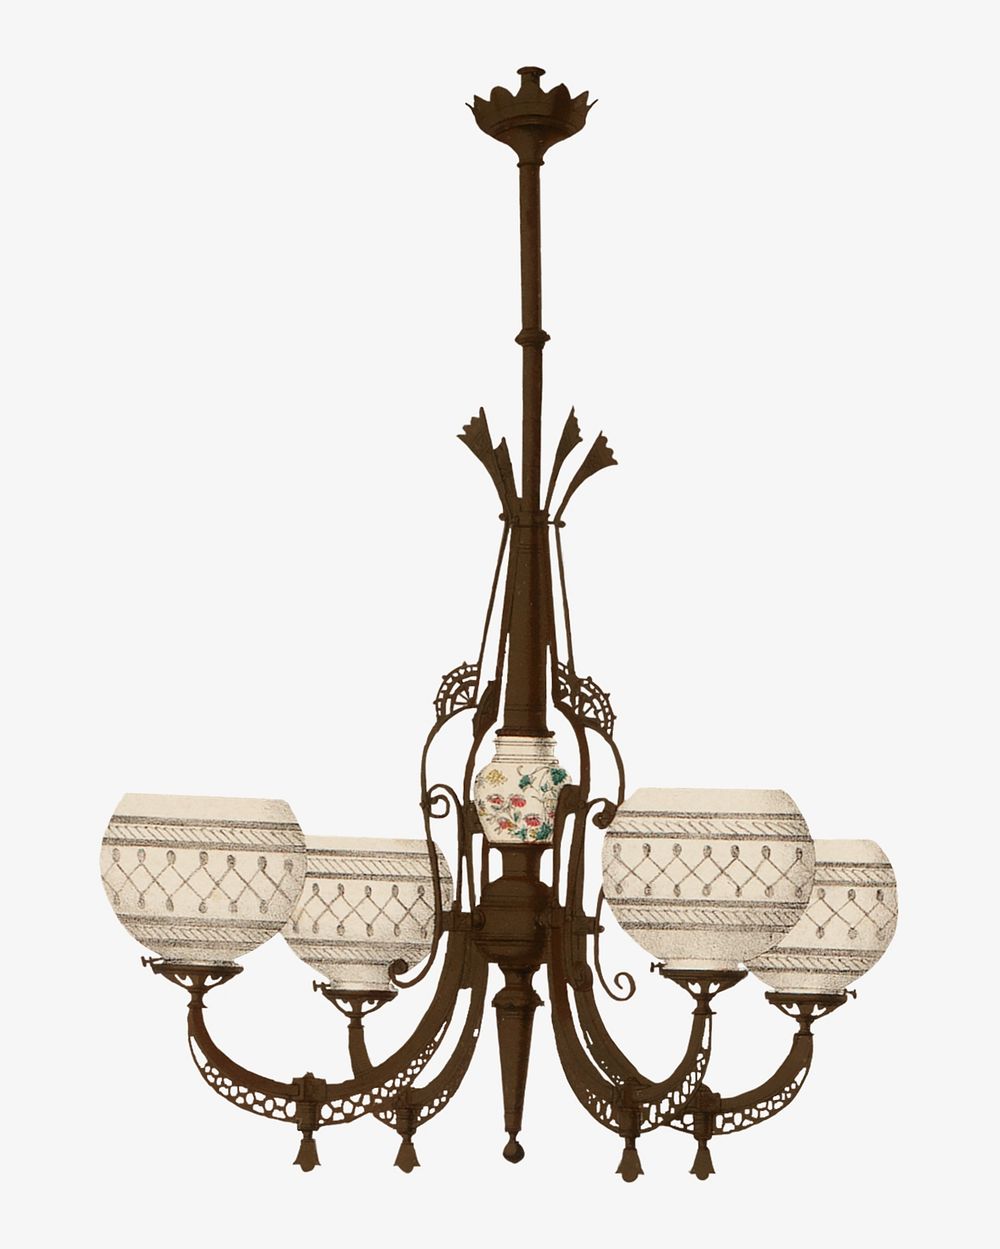 Victorian chandelier, vintage home decor illustration. Remastered by rawpixel.